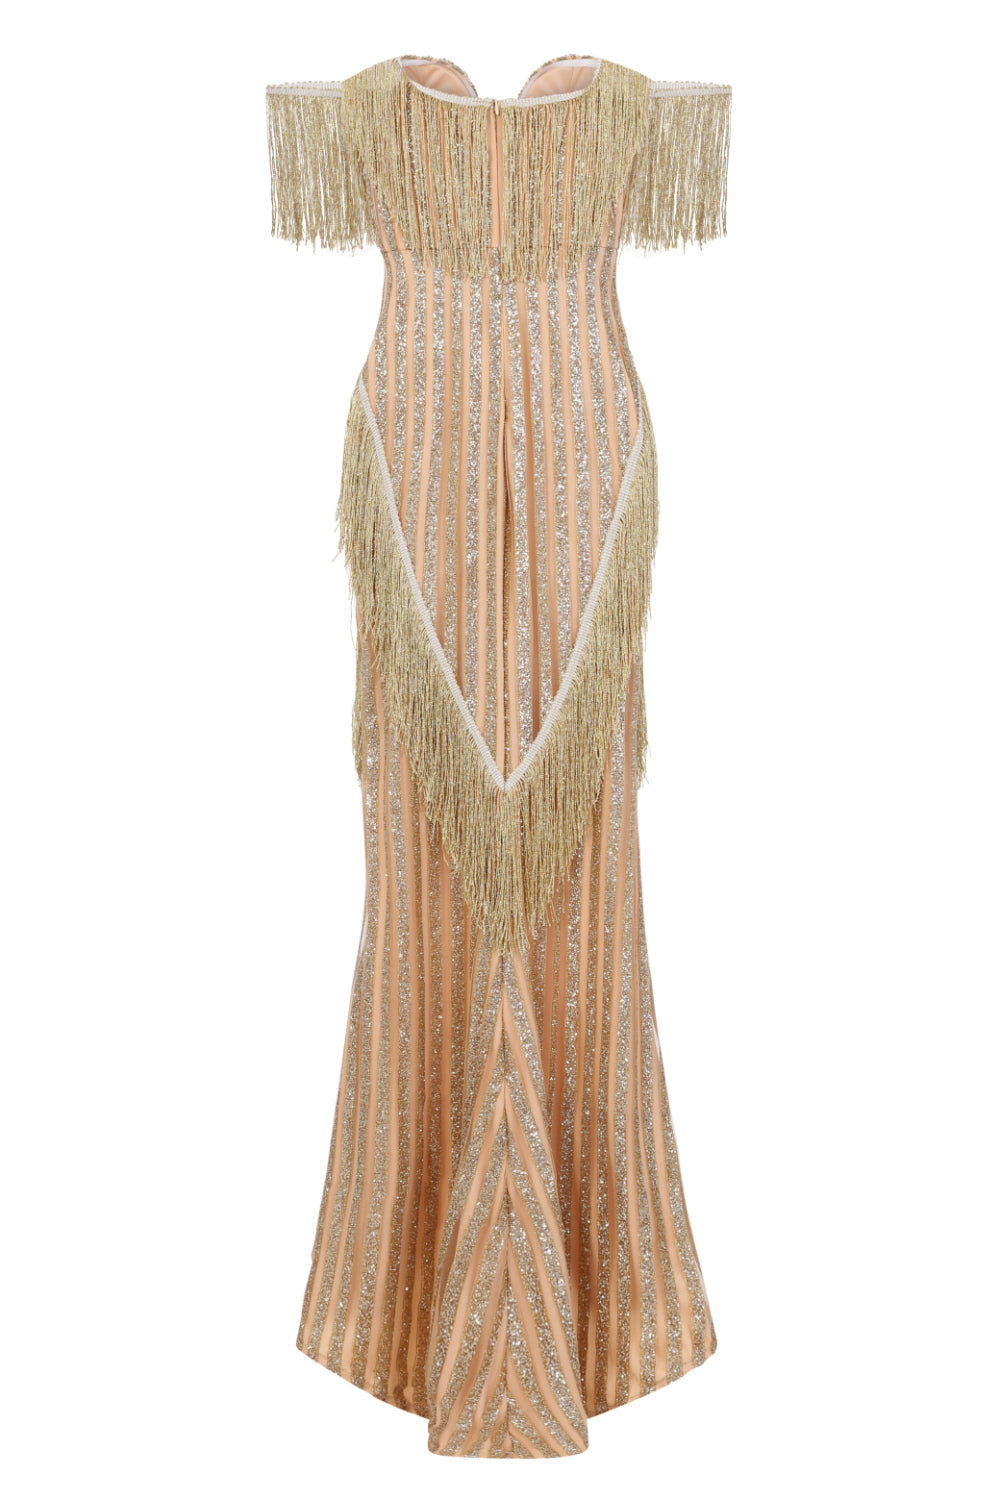 Amira Gold & Nude Glitter Stripe Tassel Fringe Bardot Fishtail Dress